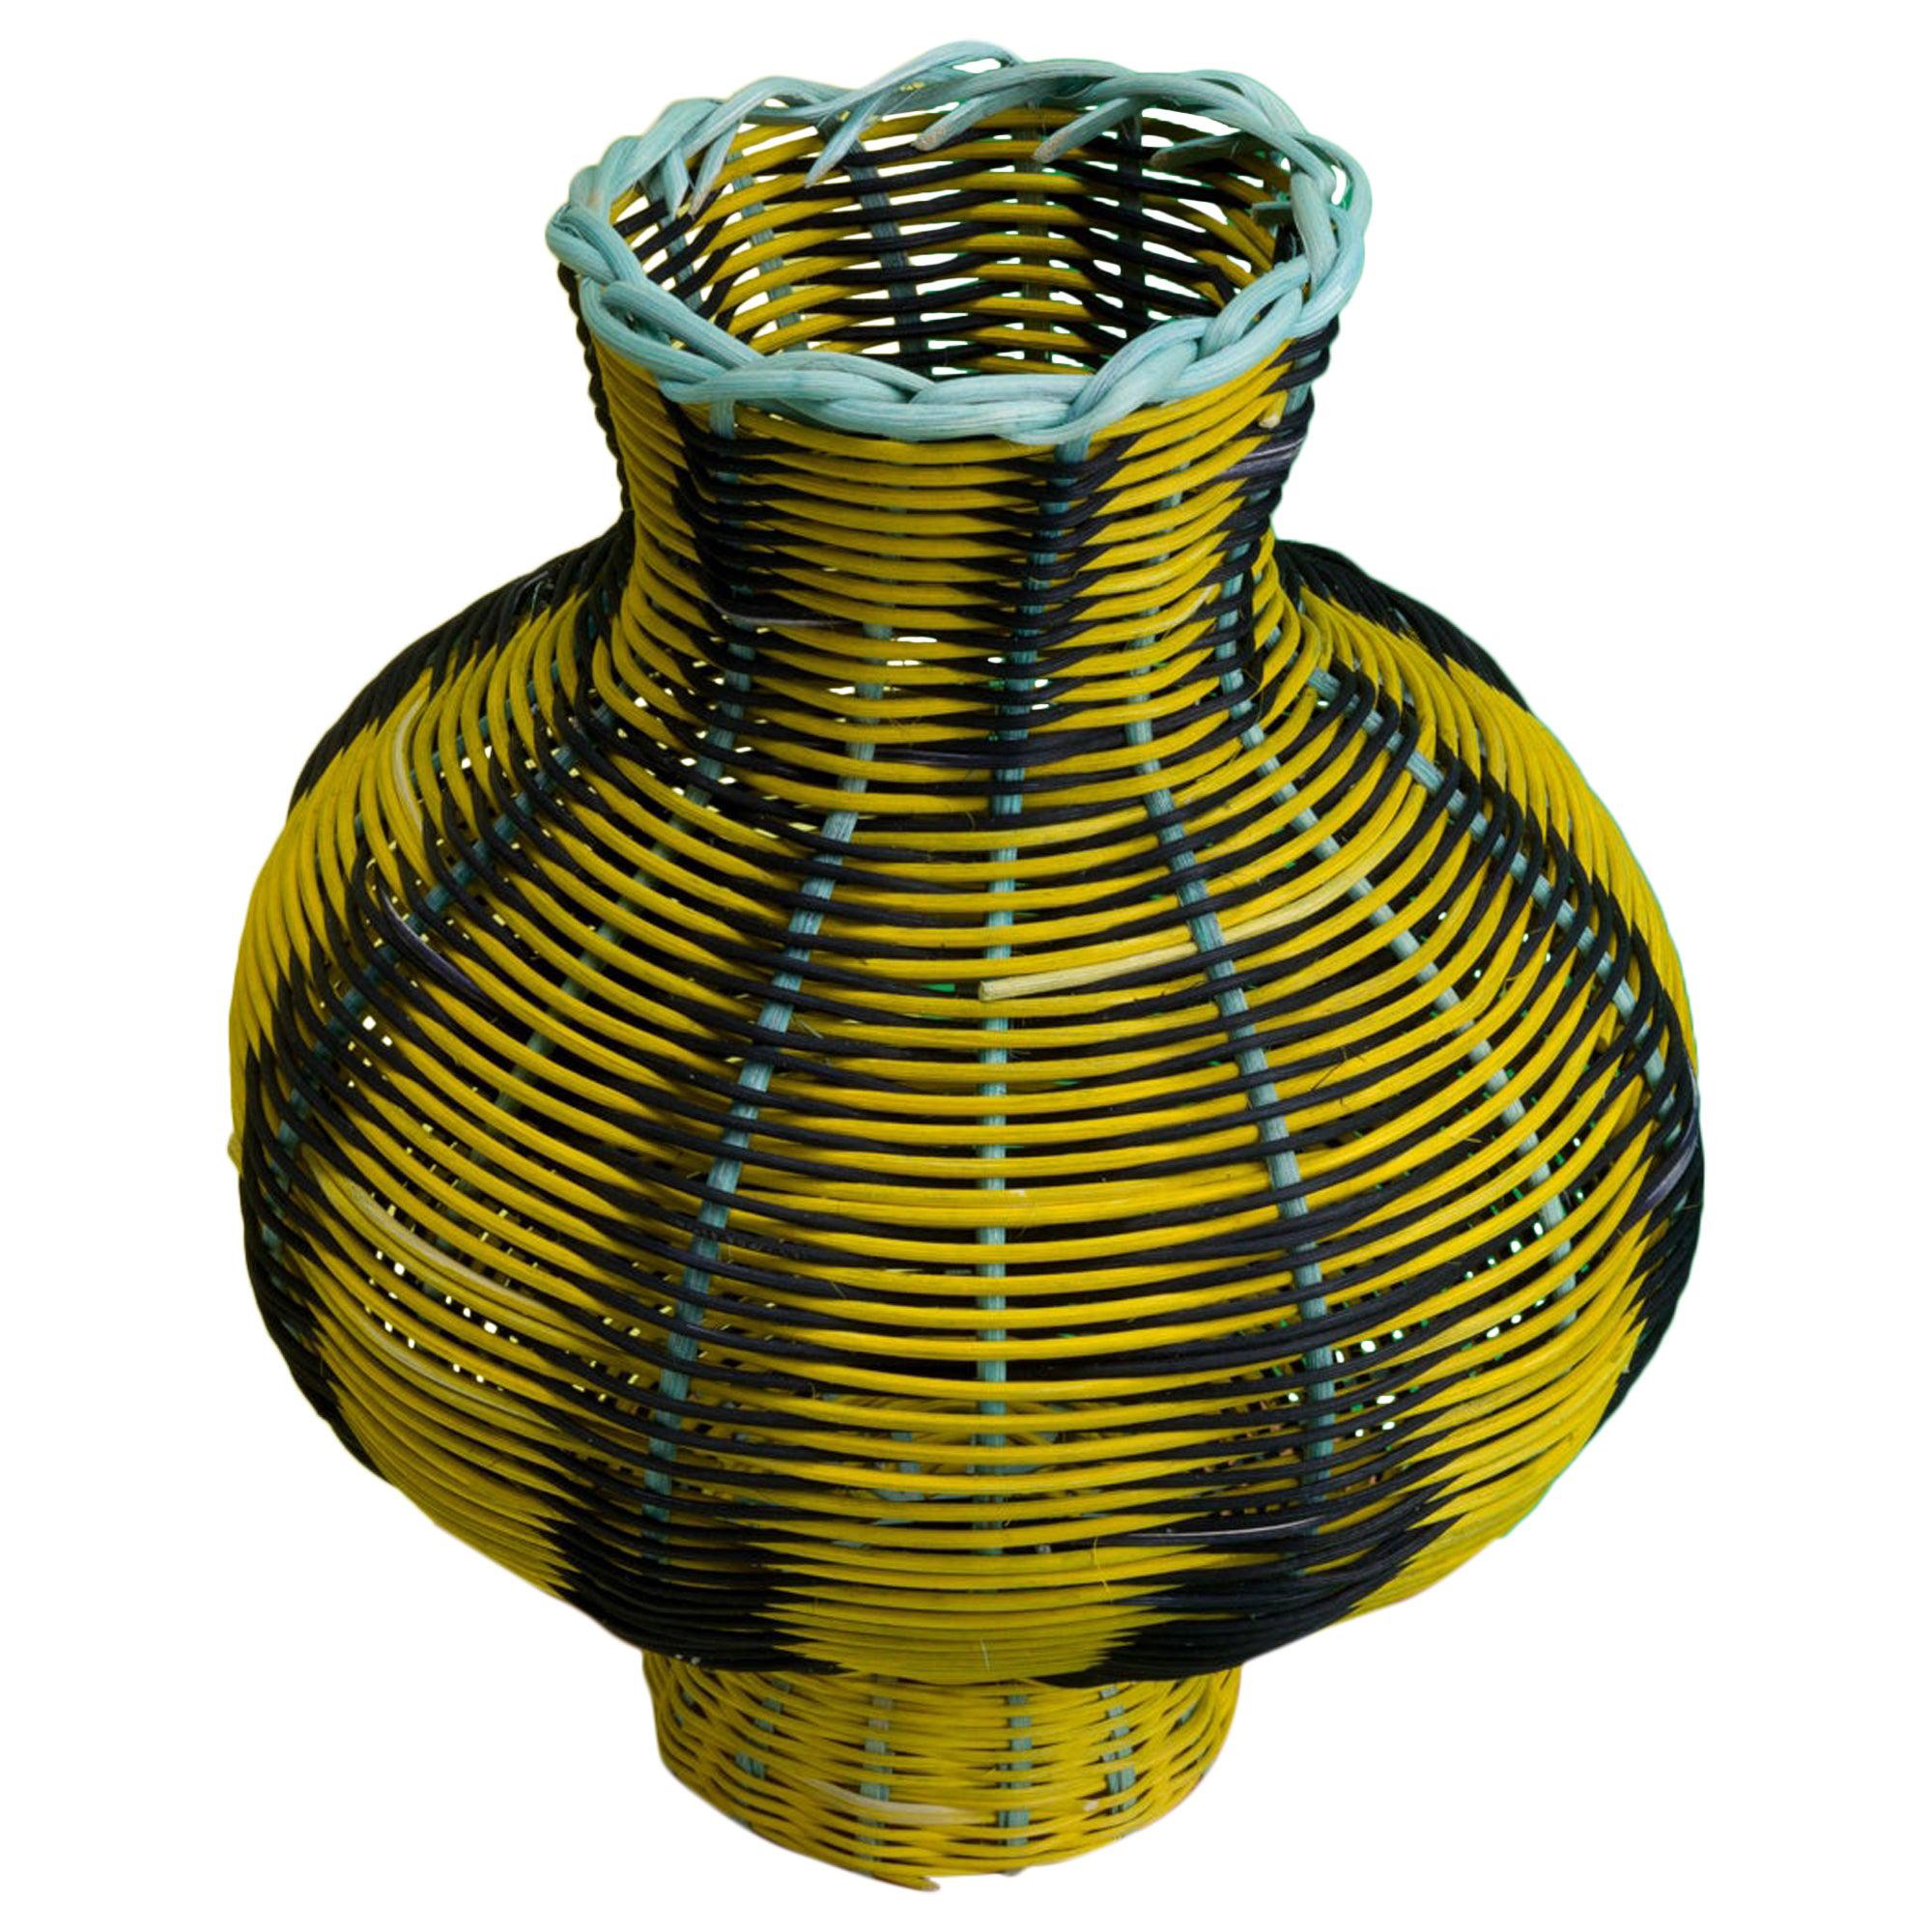 Amphora Woven Vase in Lemon/Black/Emerald by Studio Herron